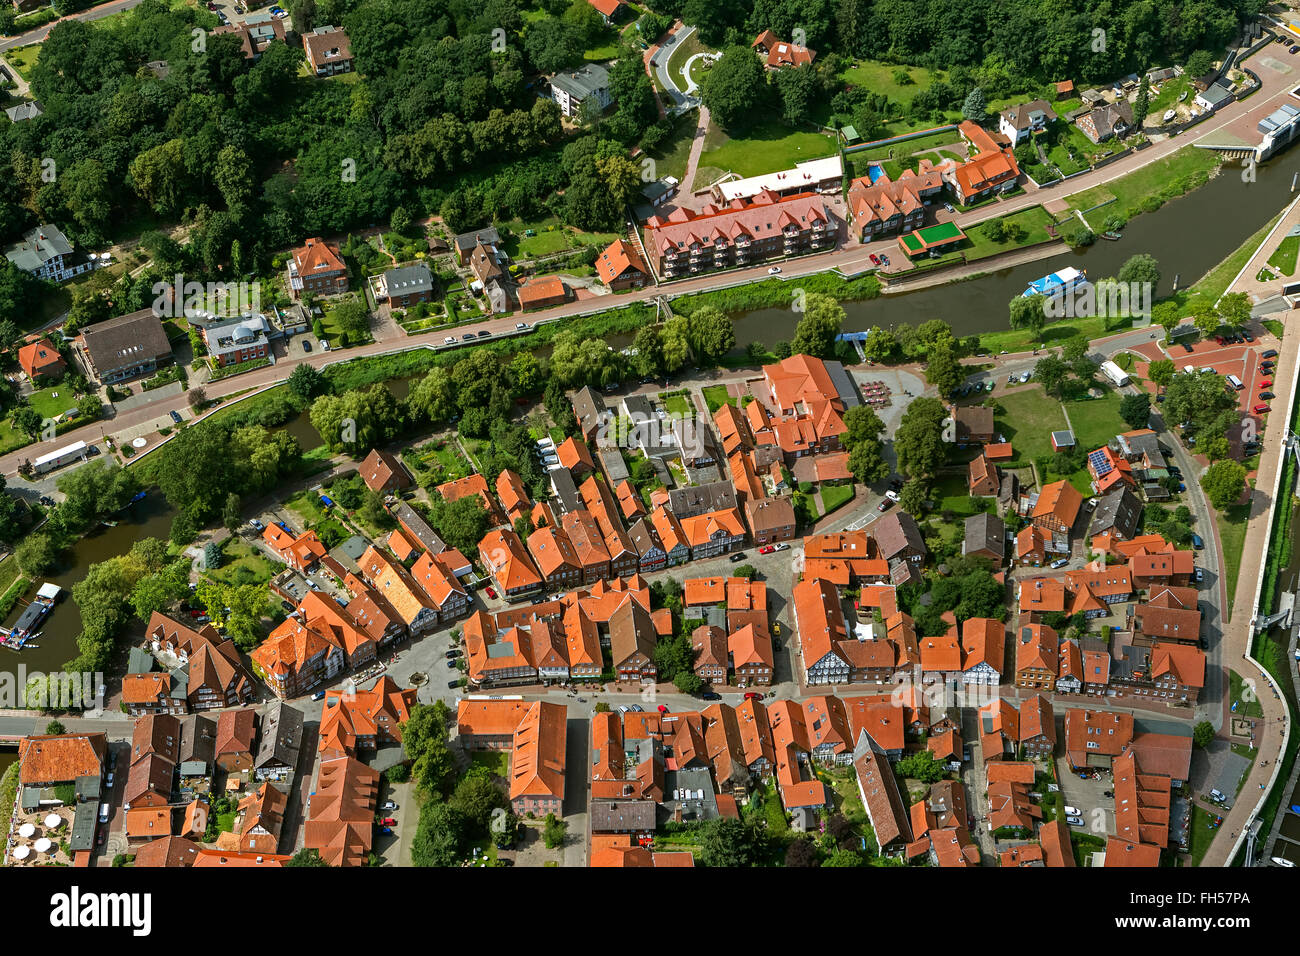 Aerial view, old town of Hitzacker with Jeetzel and Old Jeetzel, Elbe, Elbe, Hochwaaserschutzbauten, lock, Hitzacker (Elbe) Stock Photo